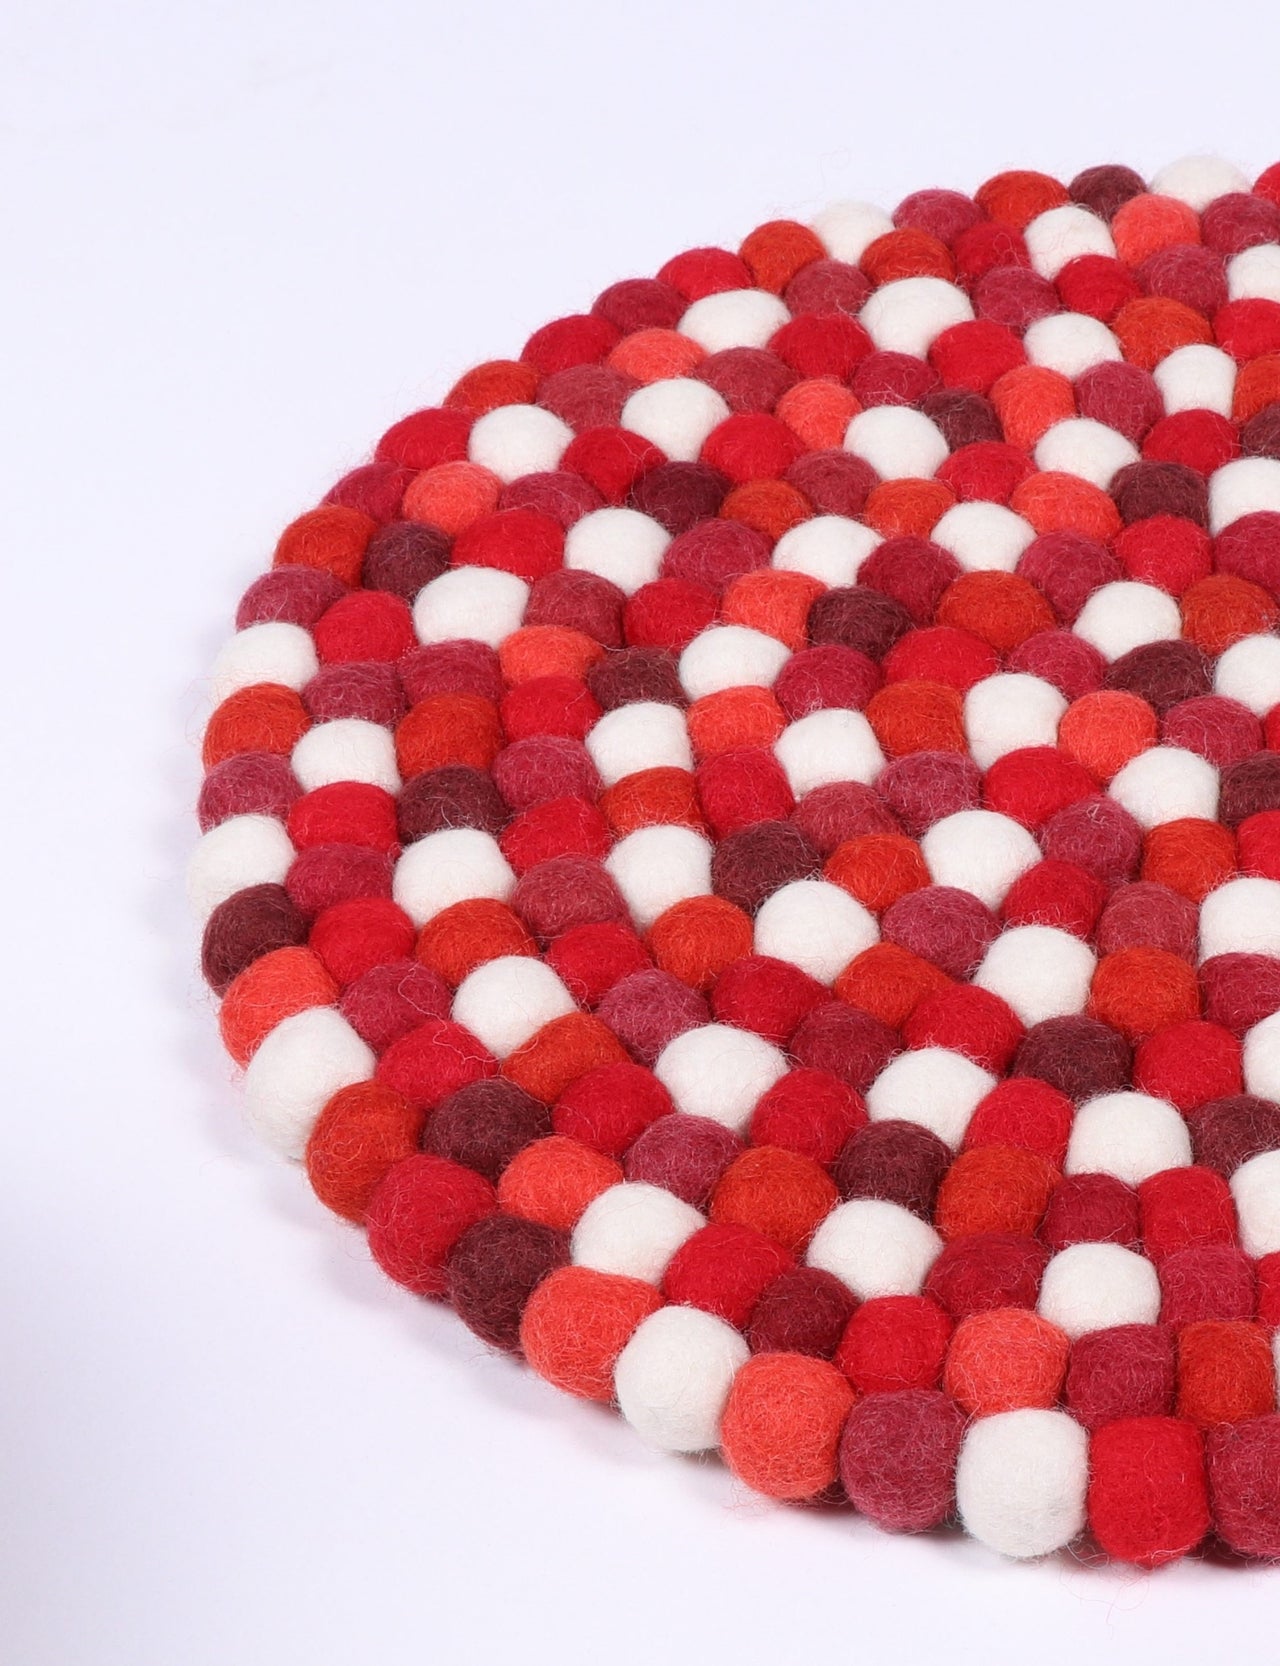 Multi coloured round felt ball rugs